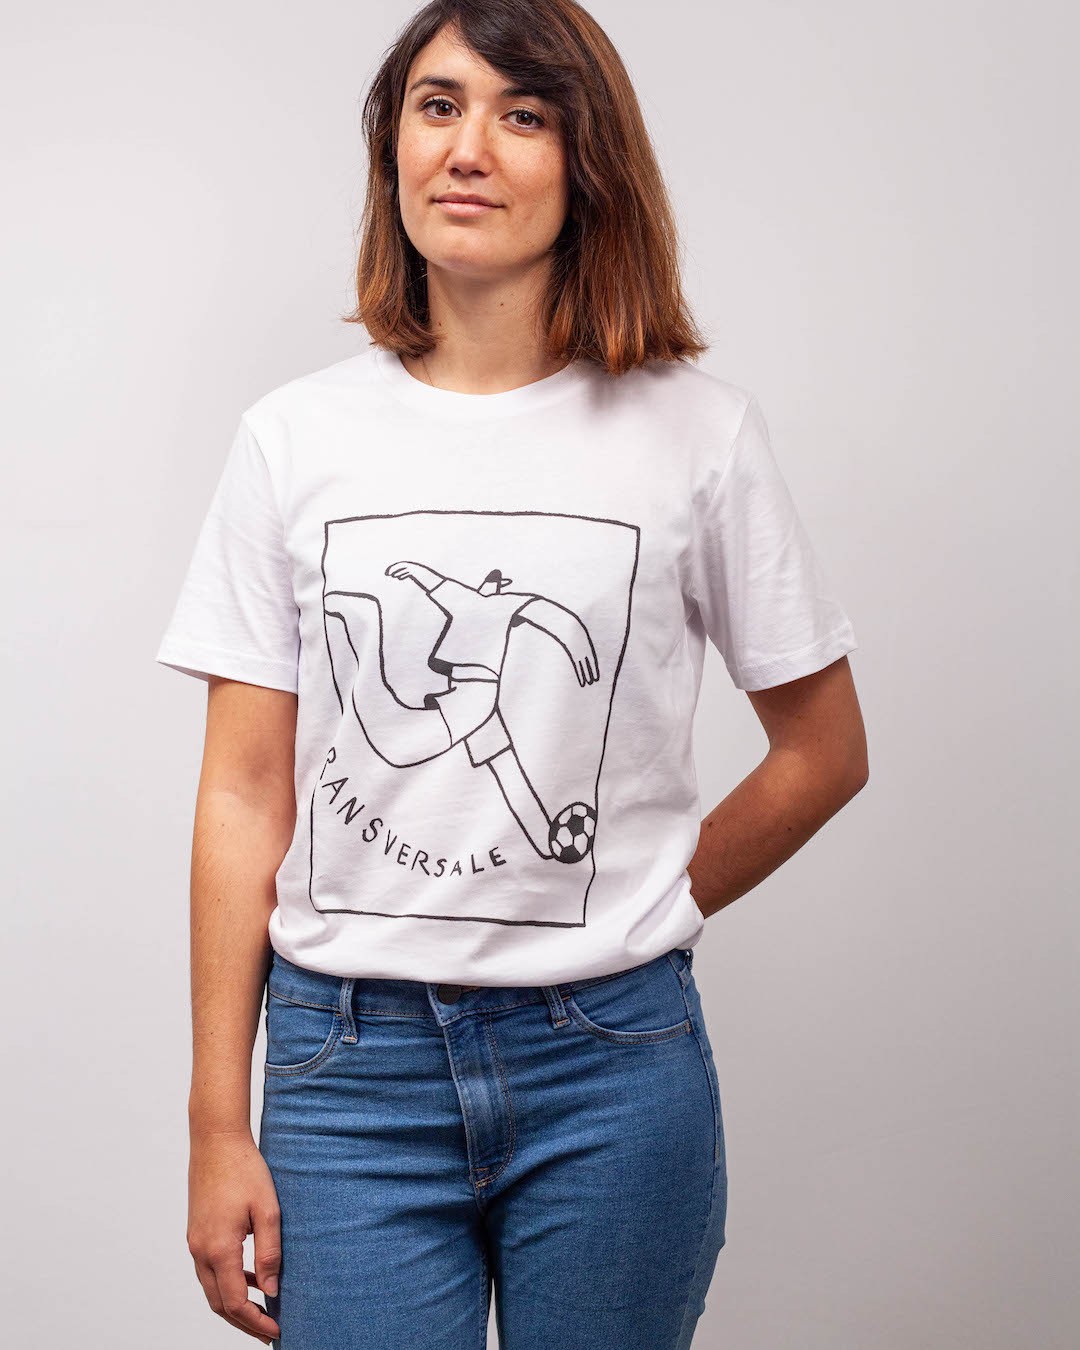 T-shirt Transversale by Pauline - Noir